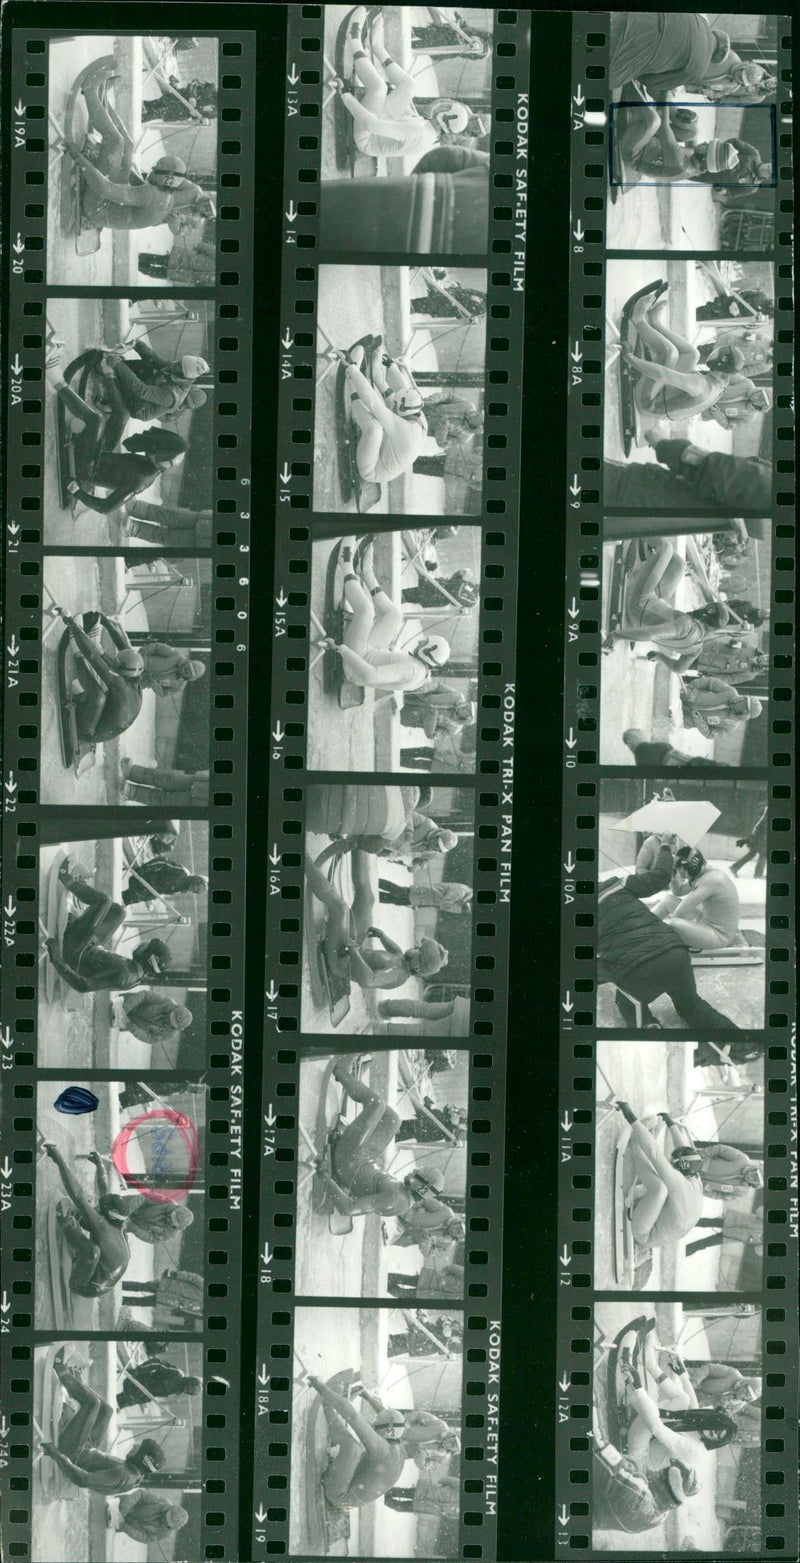 1980 WHEN ALBERT GRAF FILM - Vintage Photograph